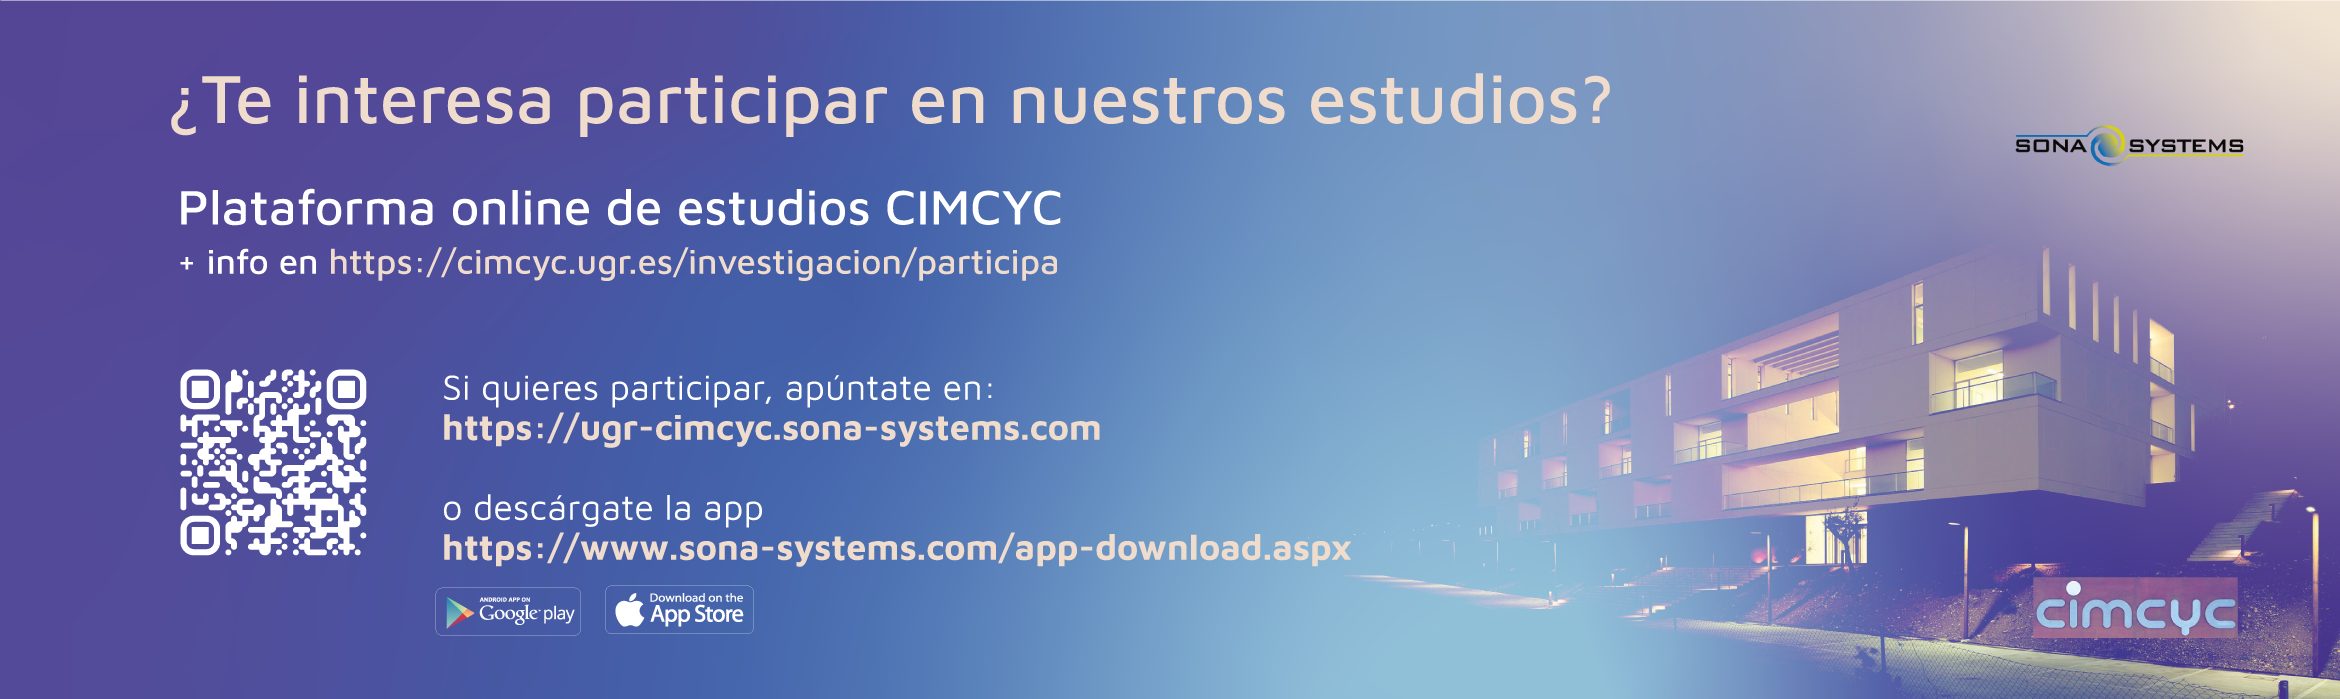 Plataforma online estudios CIMCYC